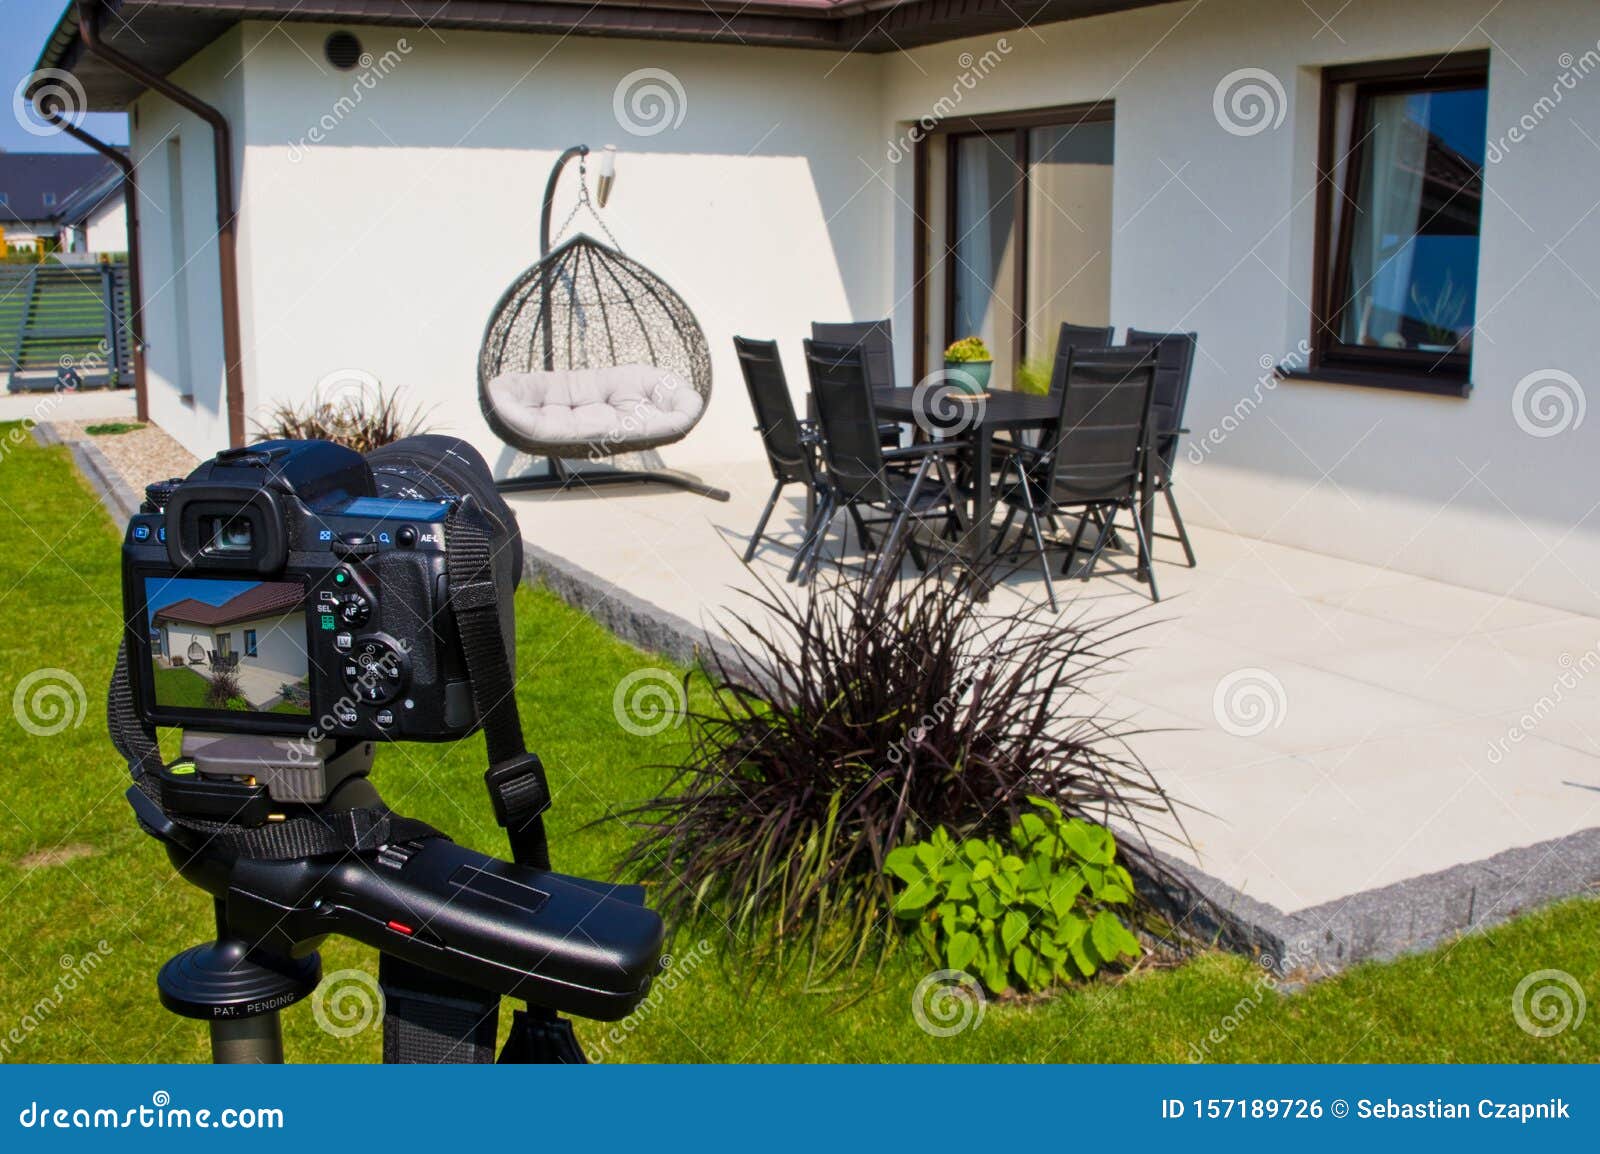 shooting house exterior, photographer camera, tripod and ballhead